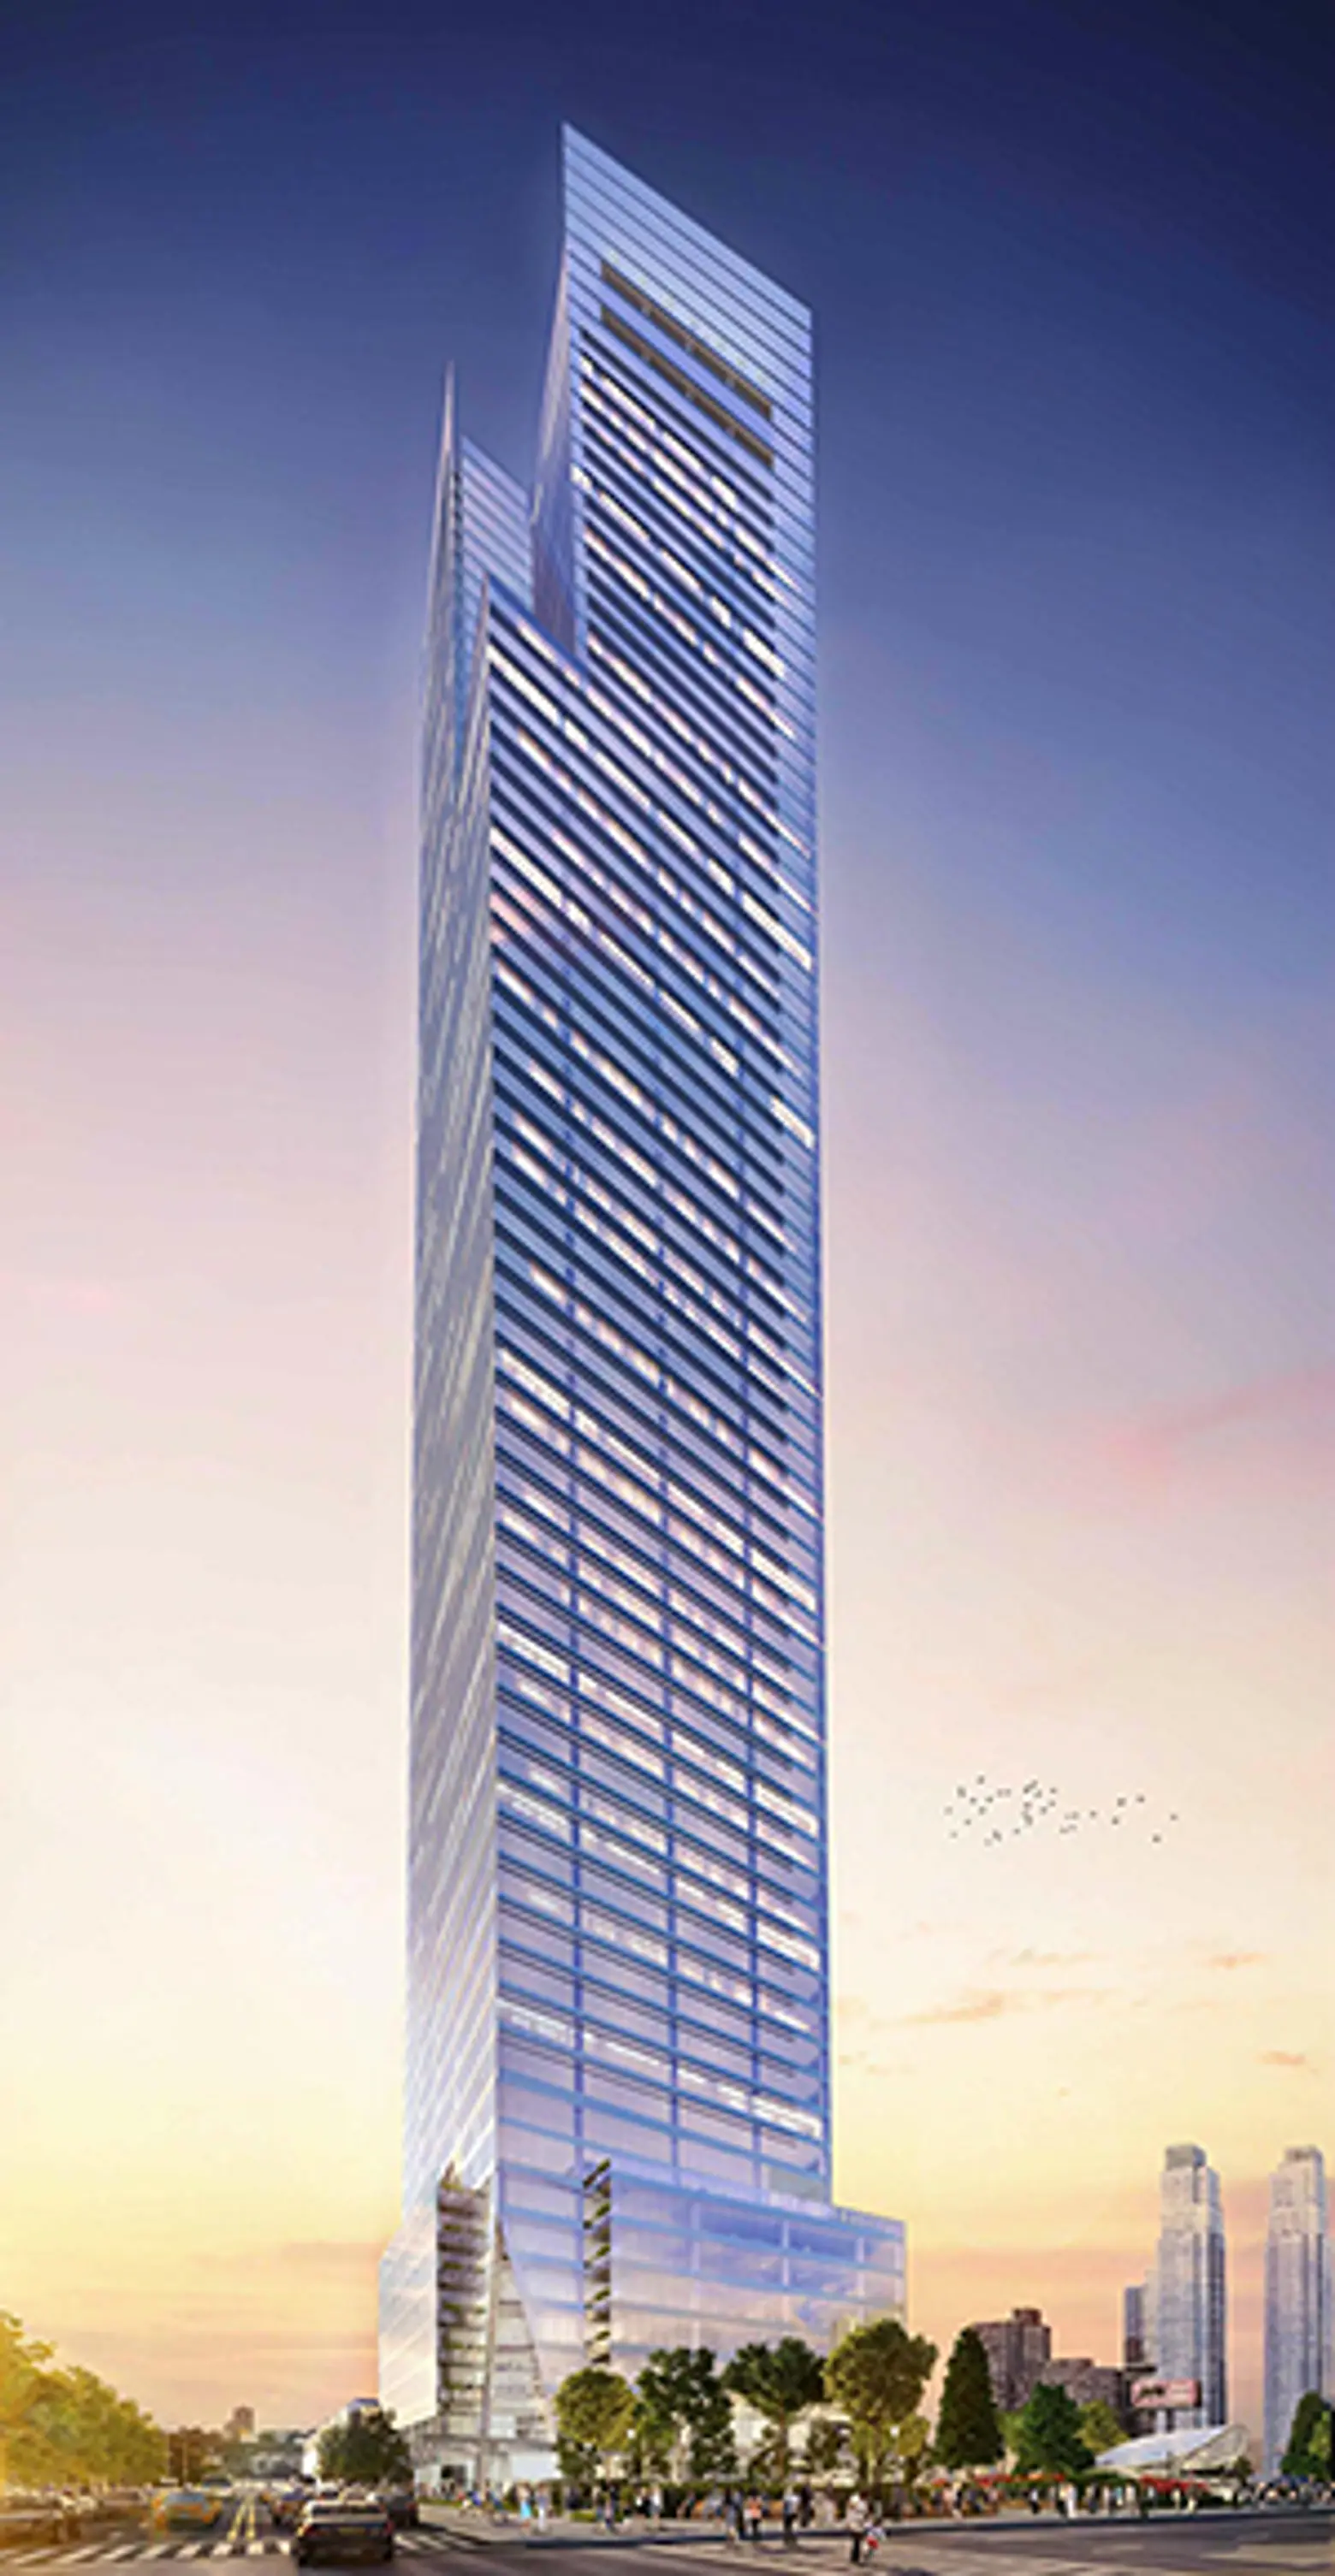 Moinian, Hudson Yards, Far West Side, supertall, tallest, highest,mixed-use, dbox, FXFowle, skyscraper 